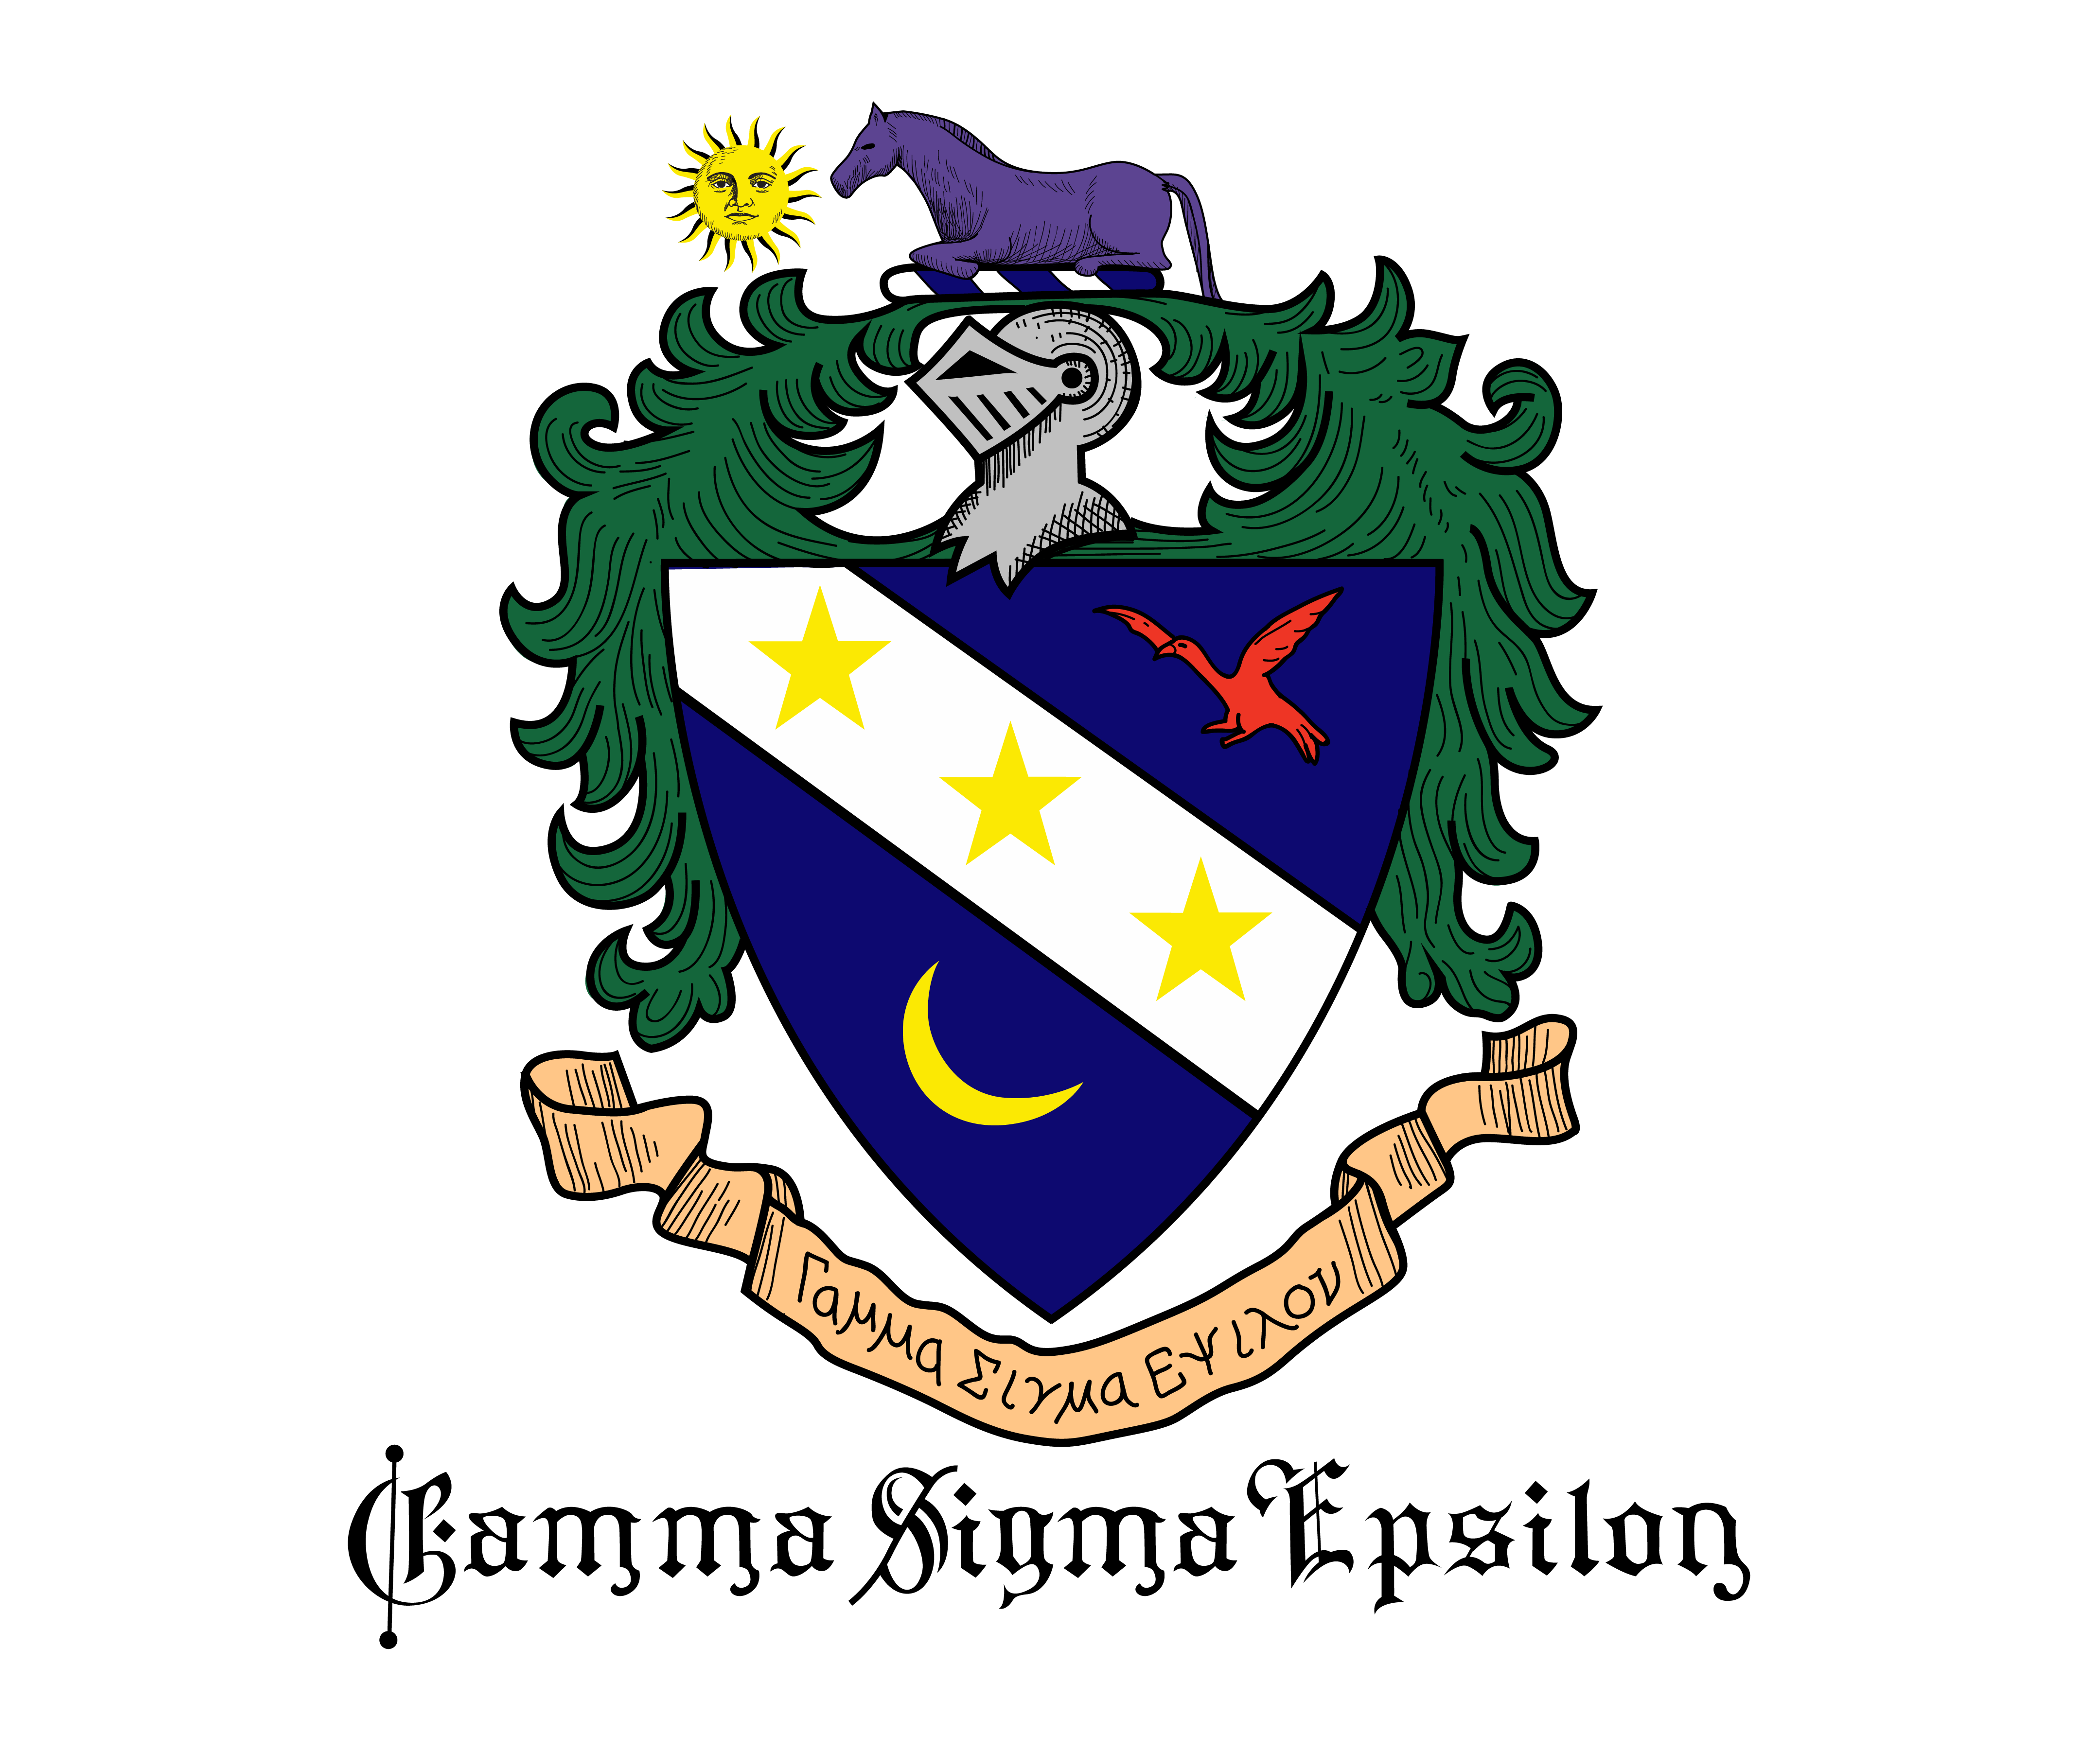 Gamma Sigma Epsilon